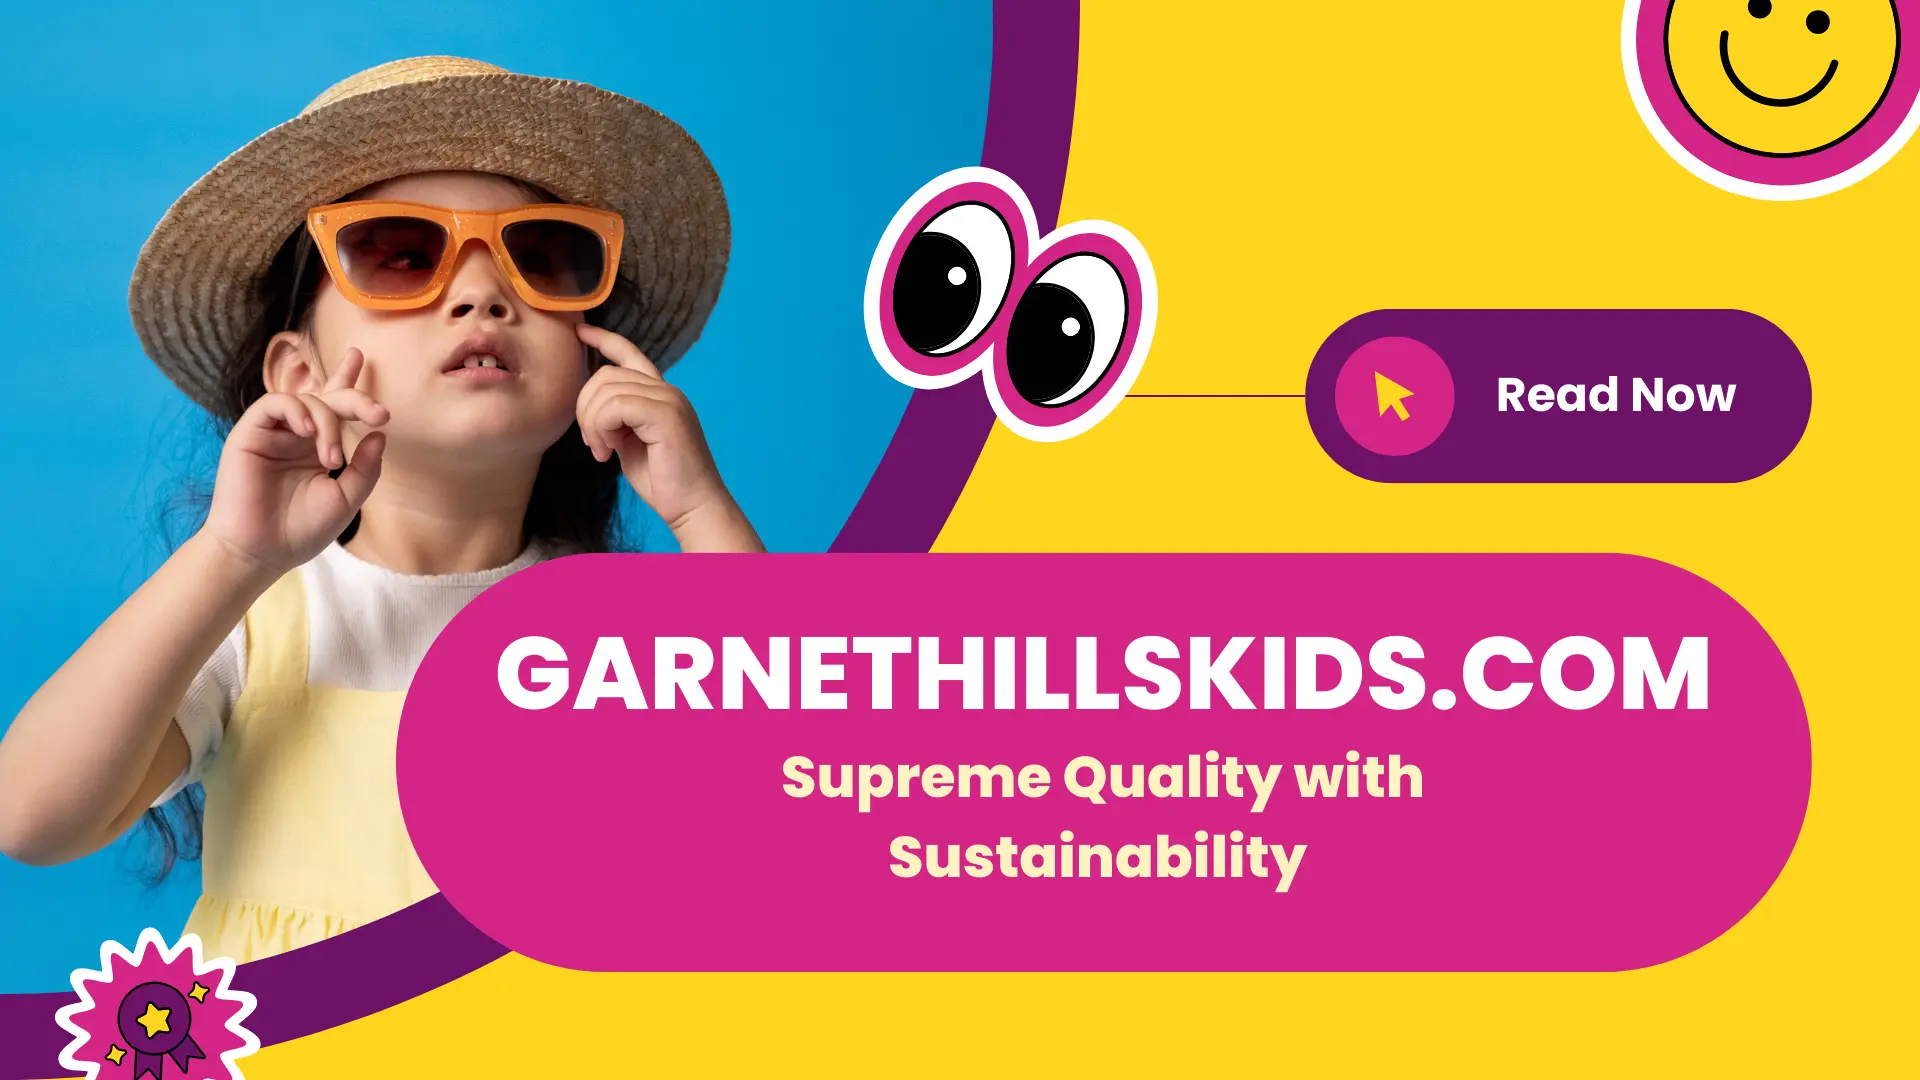 Children's Fashion with GarnetHillsKids.com: Supreme Quality with Sustainability 